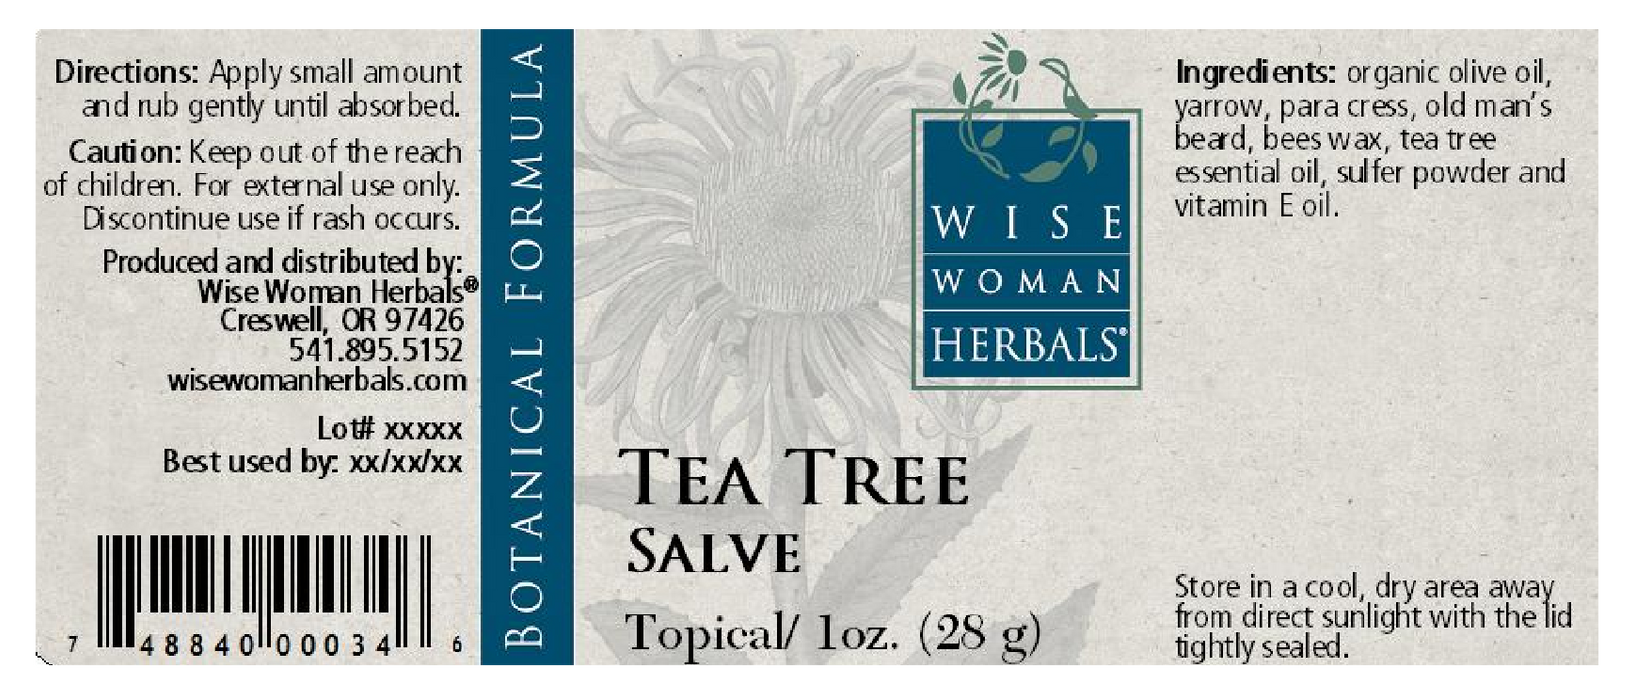 Wise Woman Herbals Tea Tree Salve